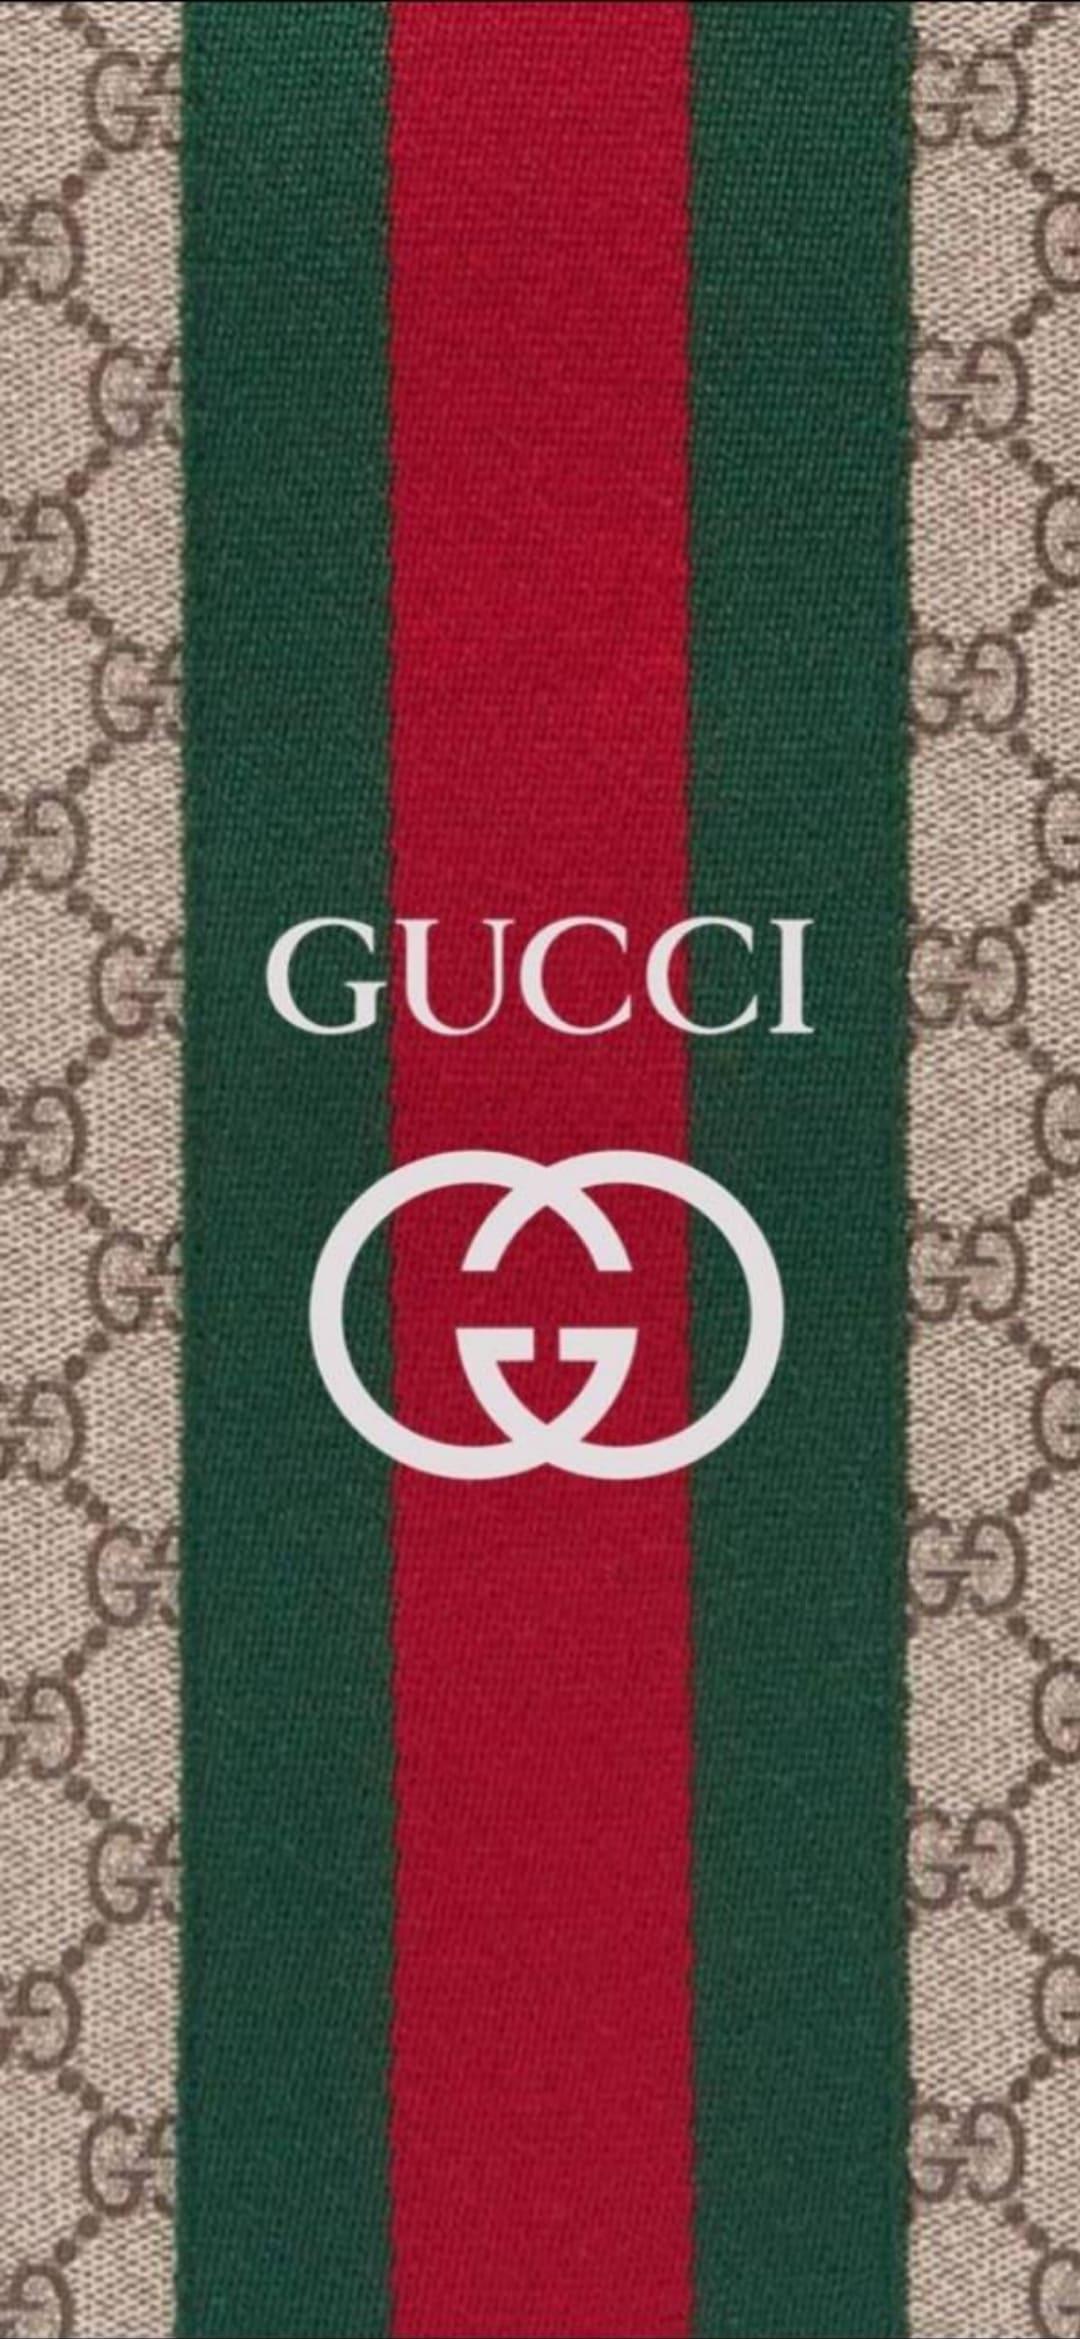 Gucci Phone Wallpaper Top Best